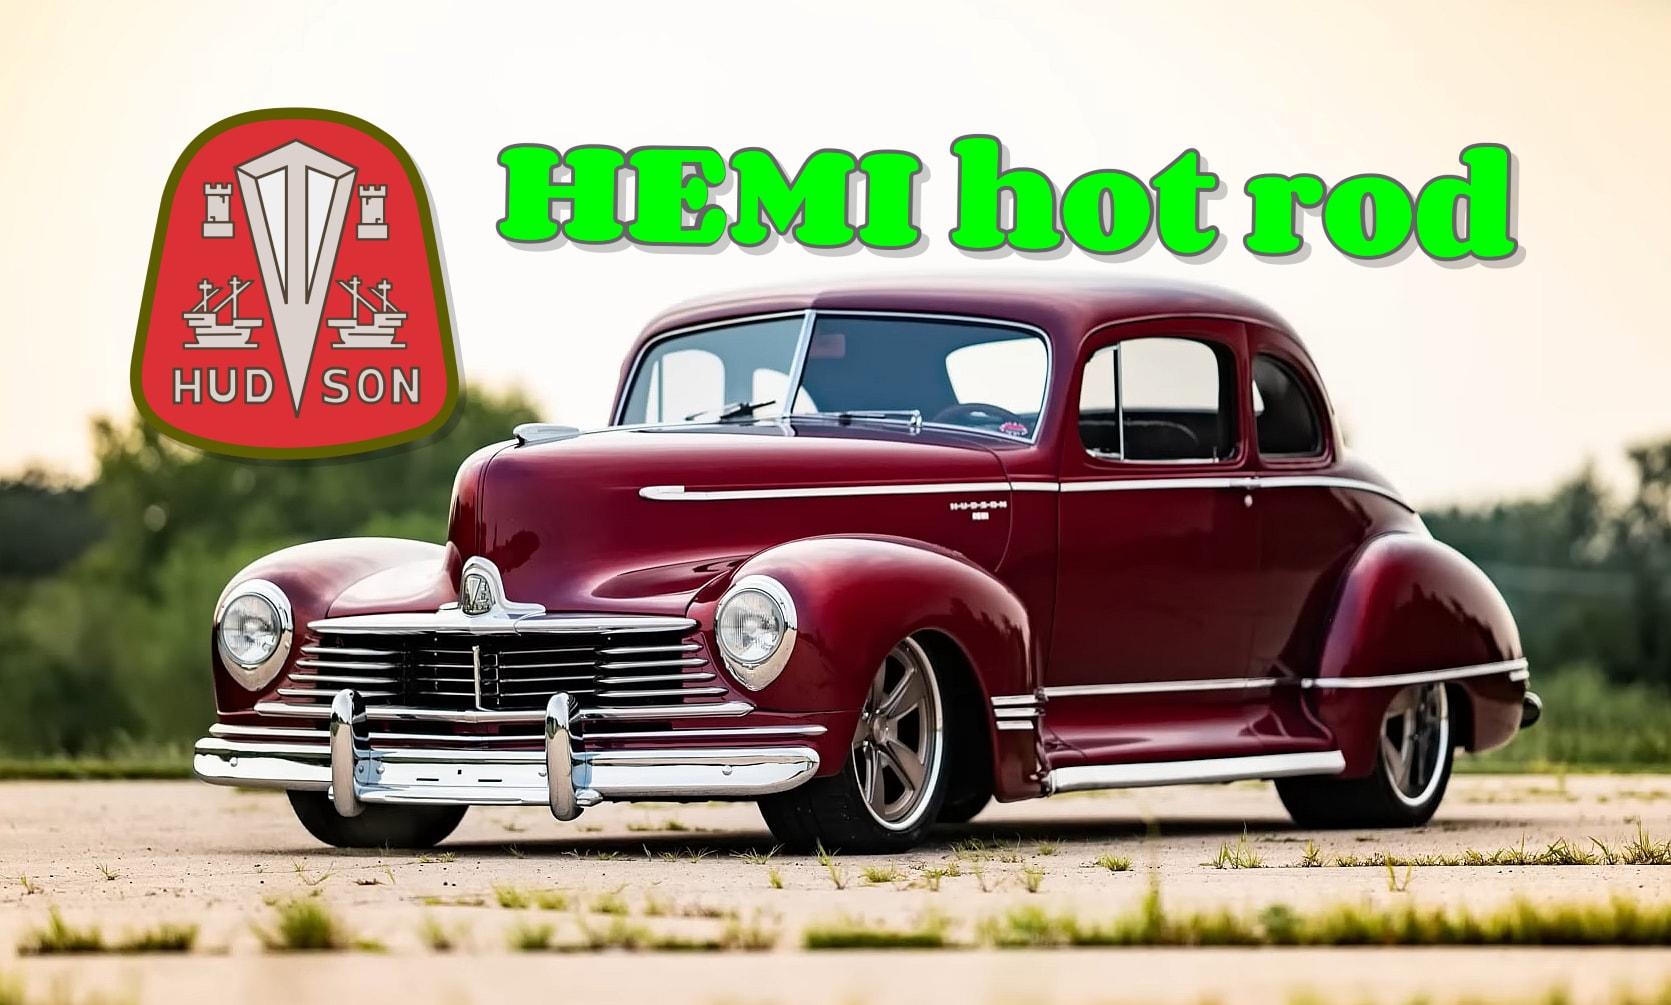 https://s1.cdn.autoevolution.com/images/news/once-a-rust-bucket-this-1947-hudson-super-six-is-now-a-hemi-powered-beauty-210525_1.jpg